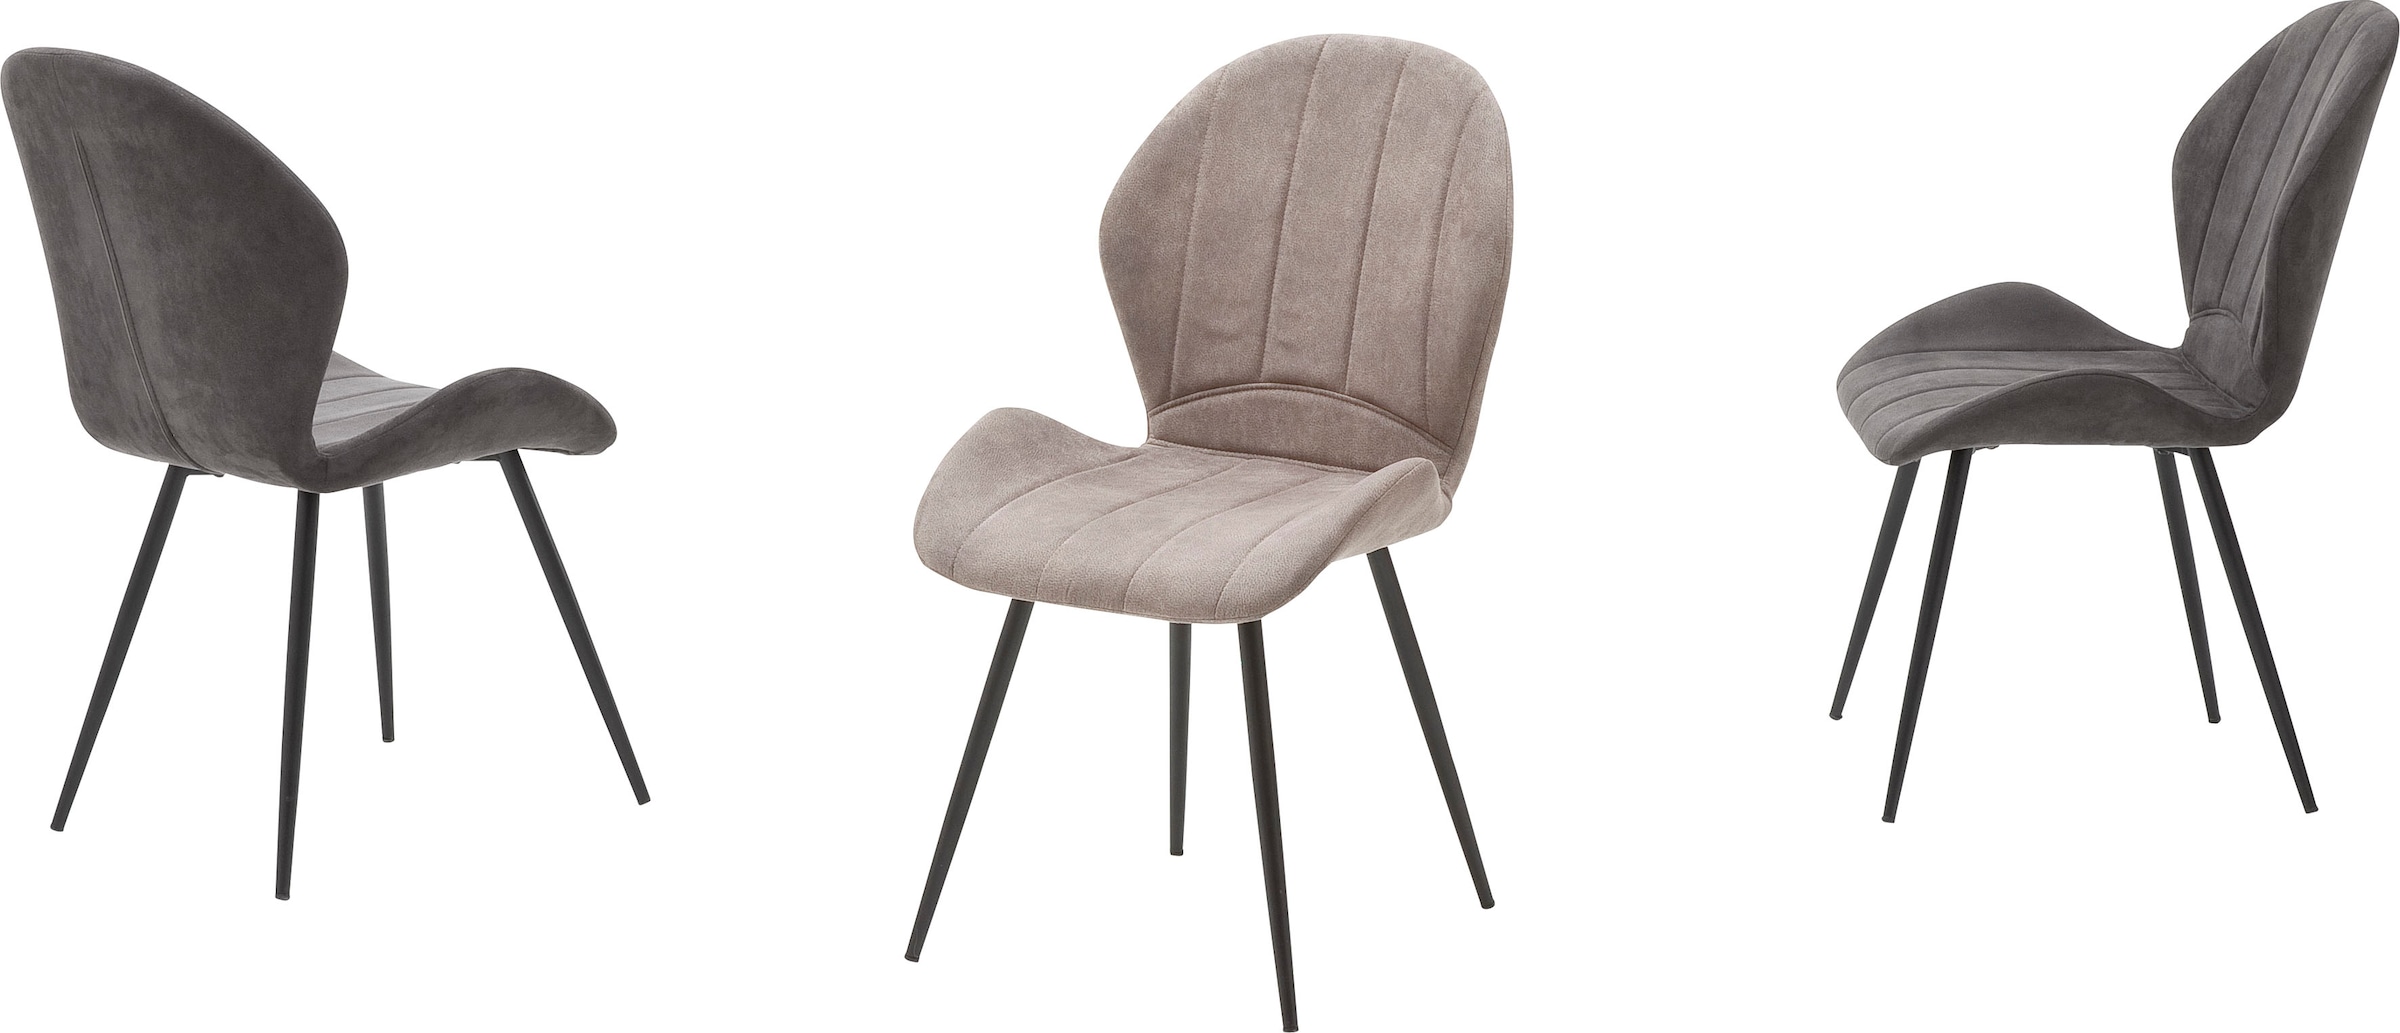 MCA furniture 4-Fußstuhl »Lima«, (Set), 2 St., 2er Set Stühle mit  Stoffbezug im Antiklook, Stuhl belastbar bis 120 kg online kaufen | 4-Fuß-Stühle